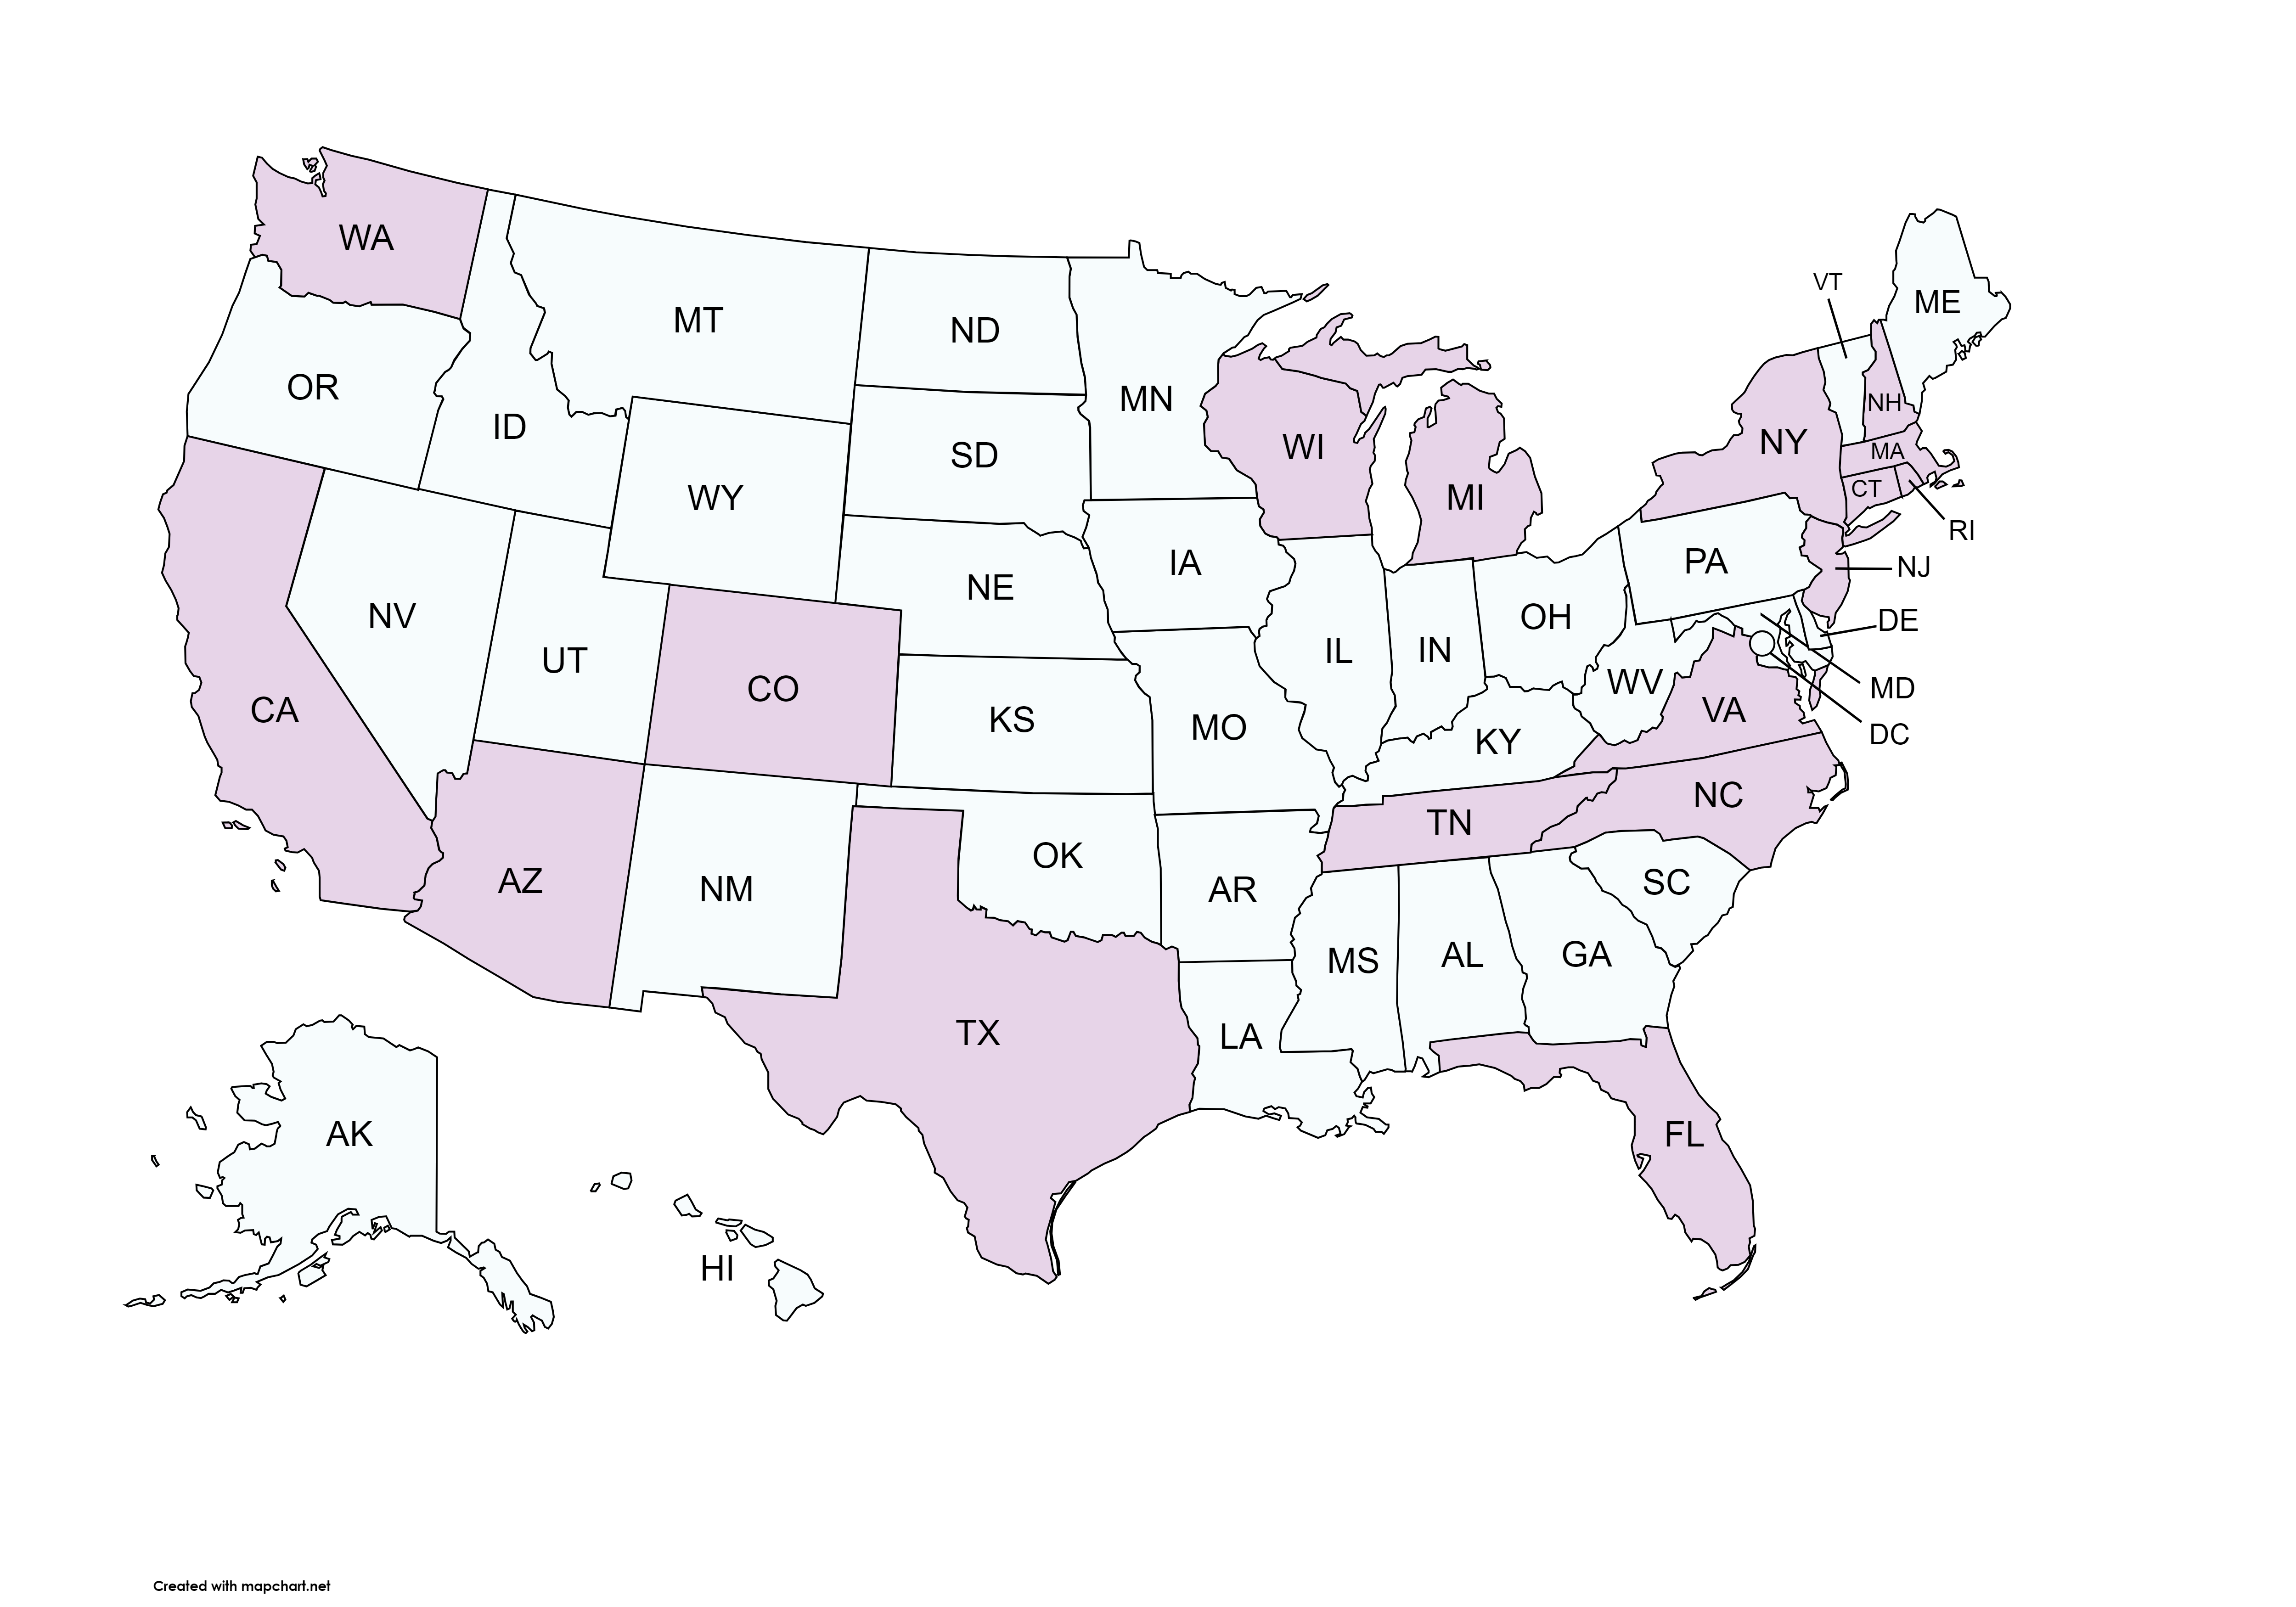 States where undergraduates ended up. Top states include Massachusetts, California, New York, and Washington.